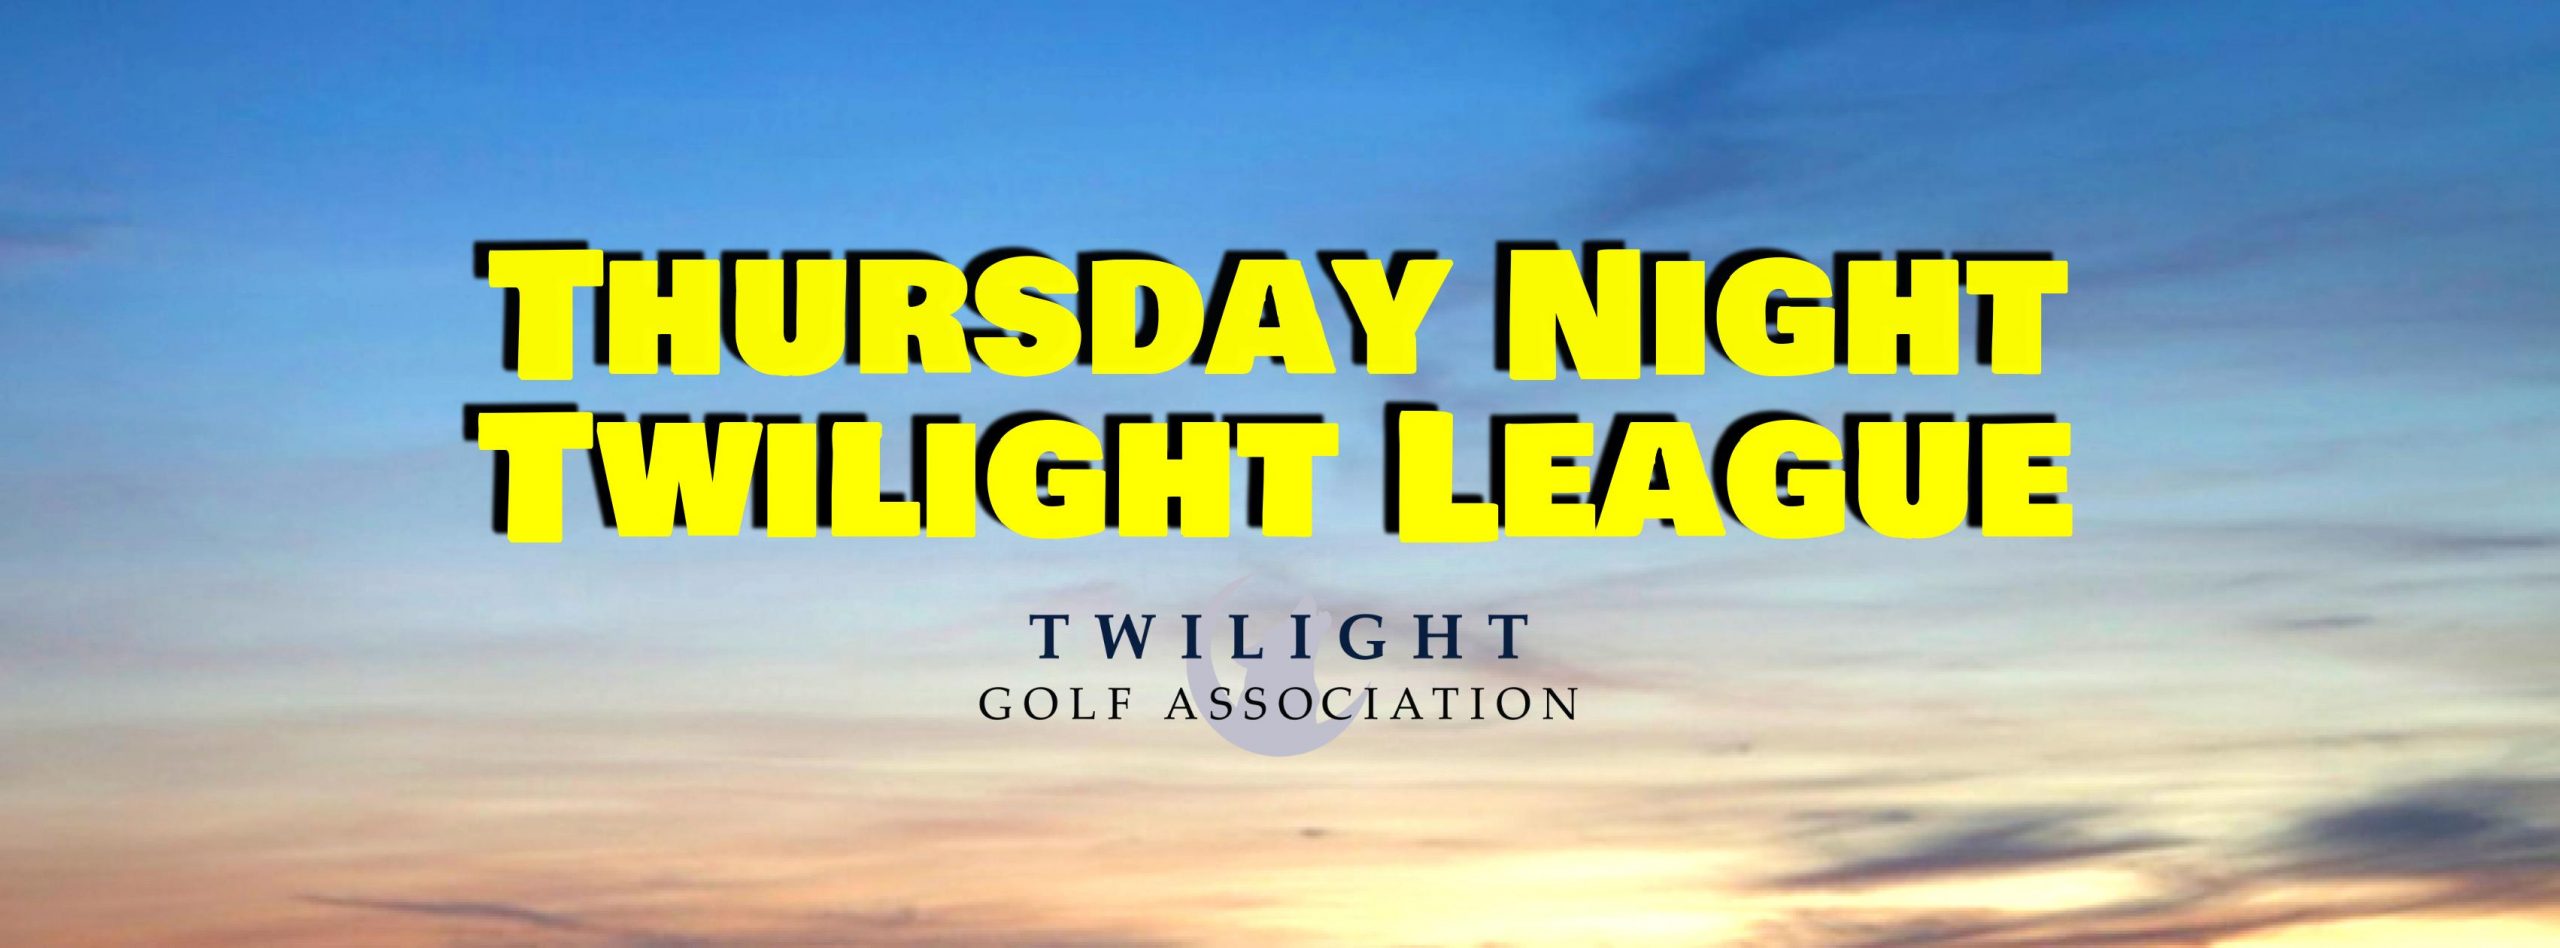 Thursday Night Twilight League at The Golf Club of Texas